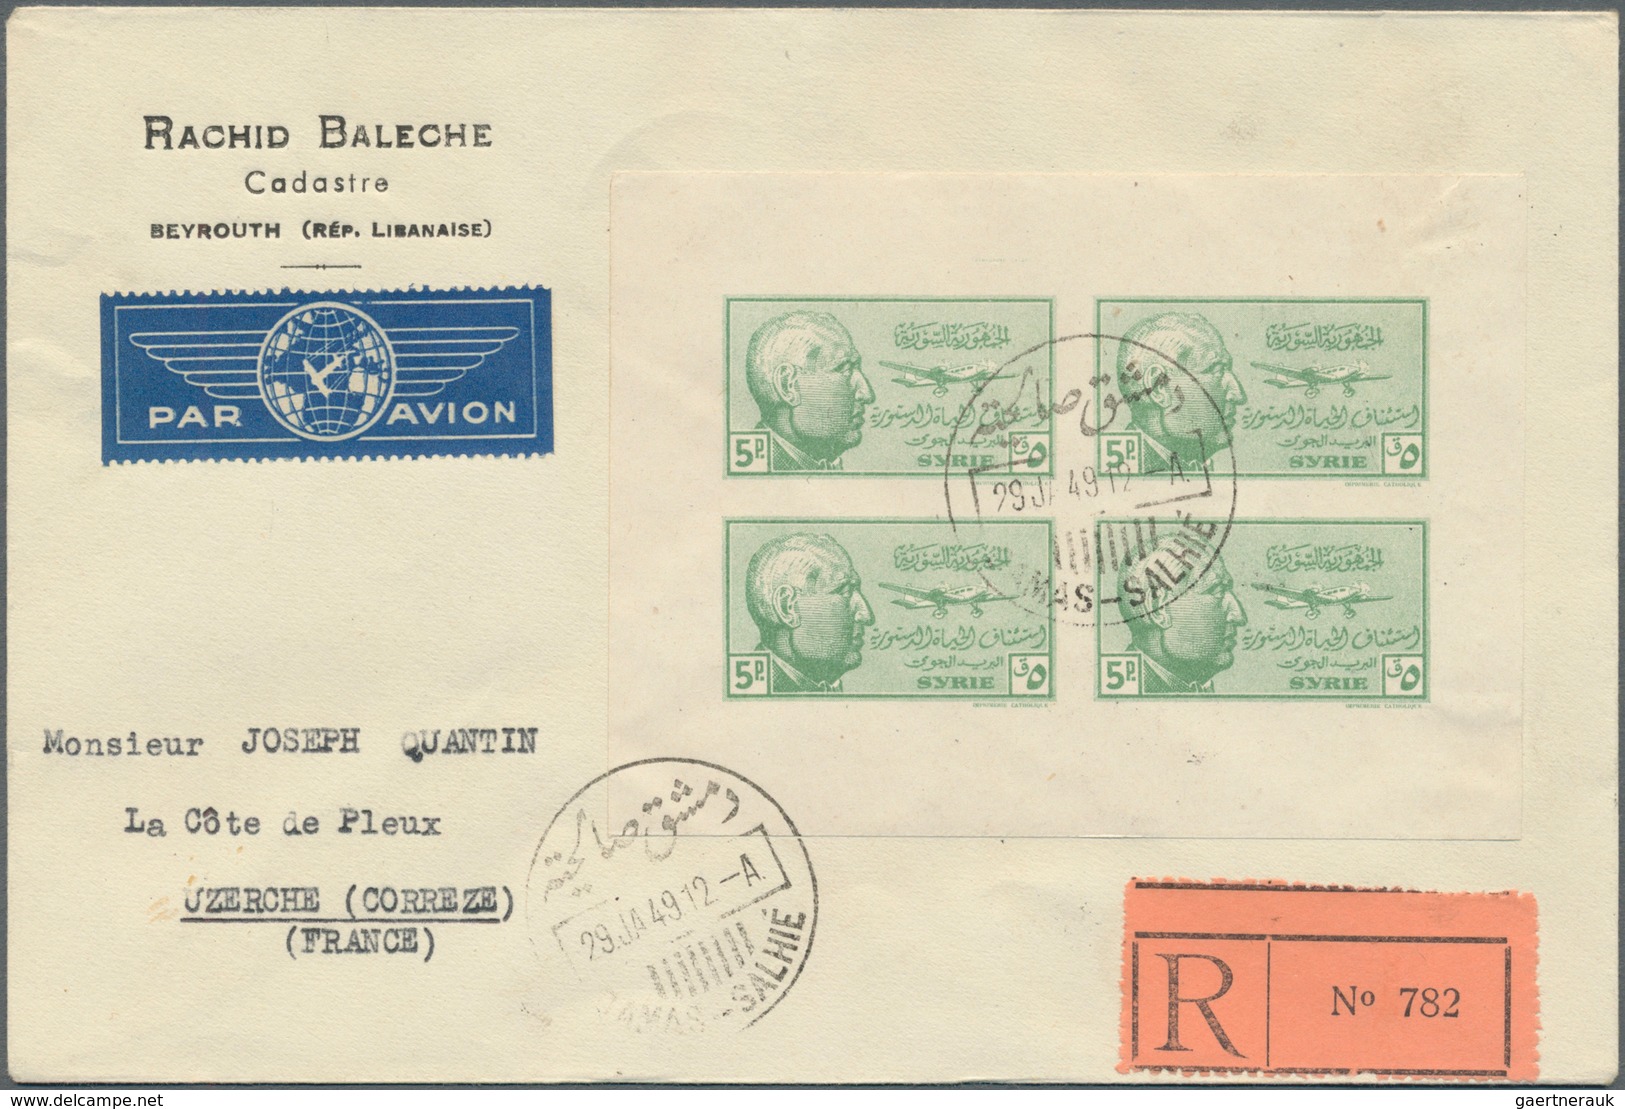 Syrien: 1945, President Shukri Al-Quwatli, 5pi. Green, Imperforate Mini Sheet With Four Stamps (slig - Syrie